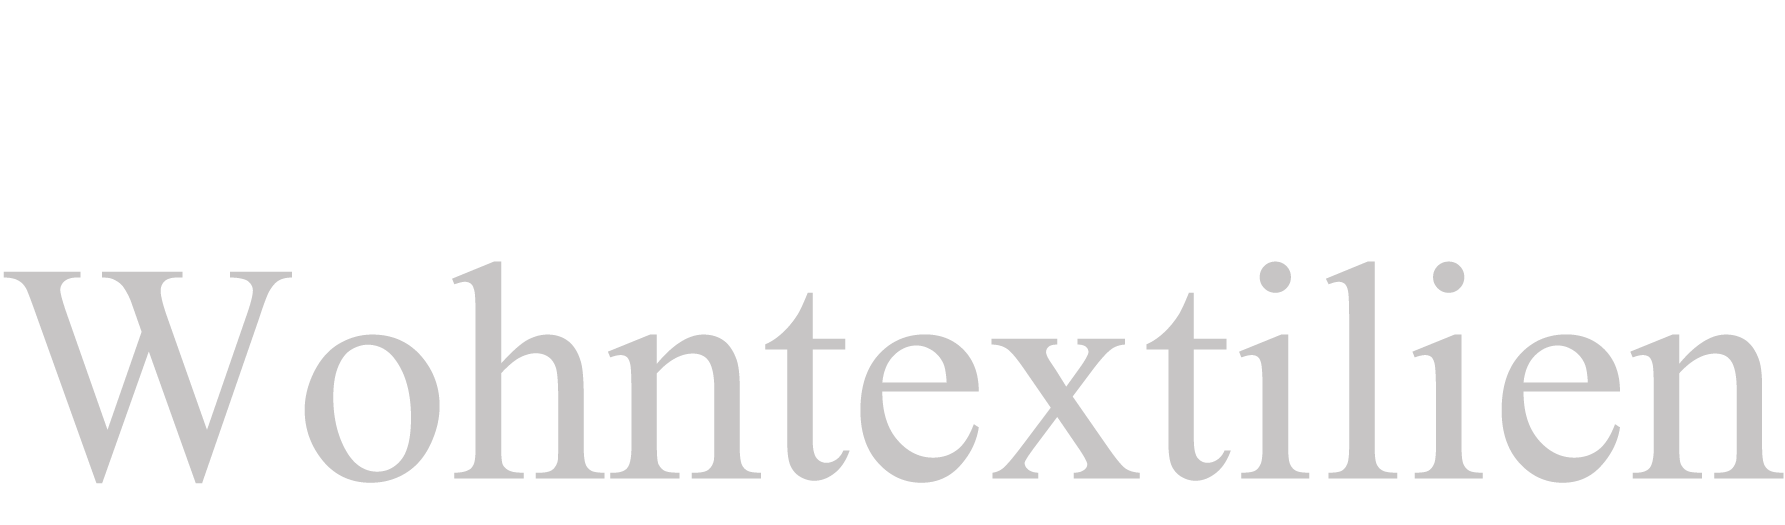 Intex Wohntextilien GmbH